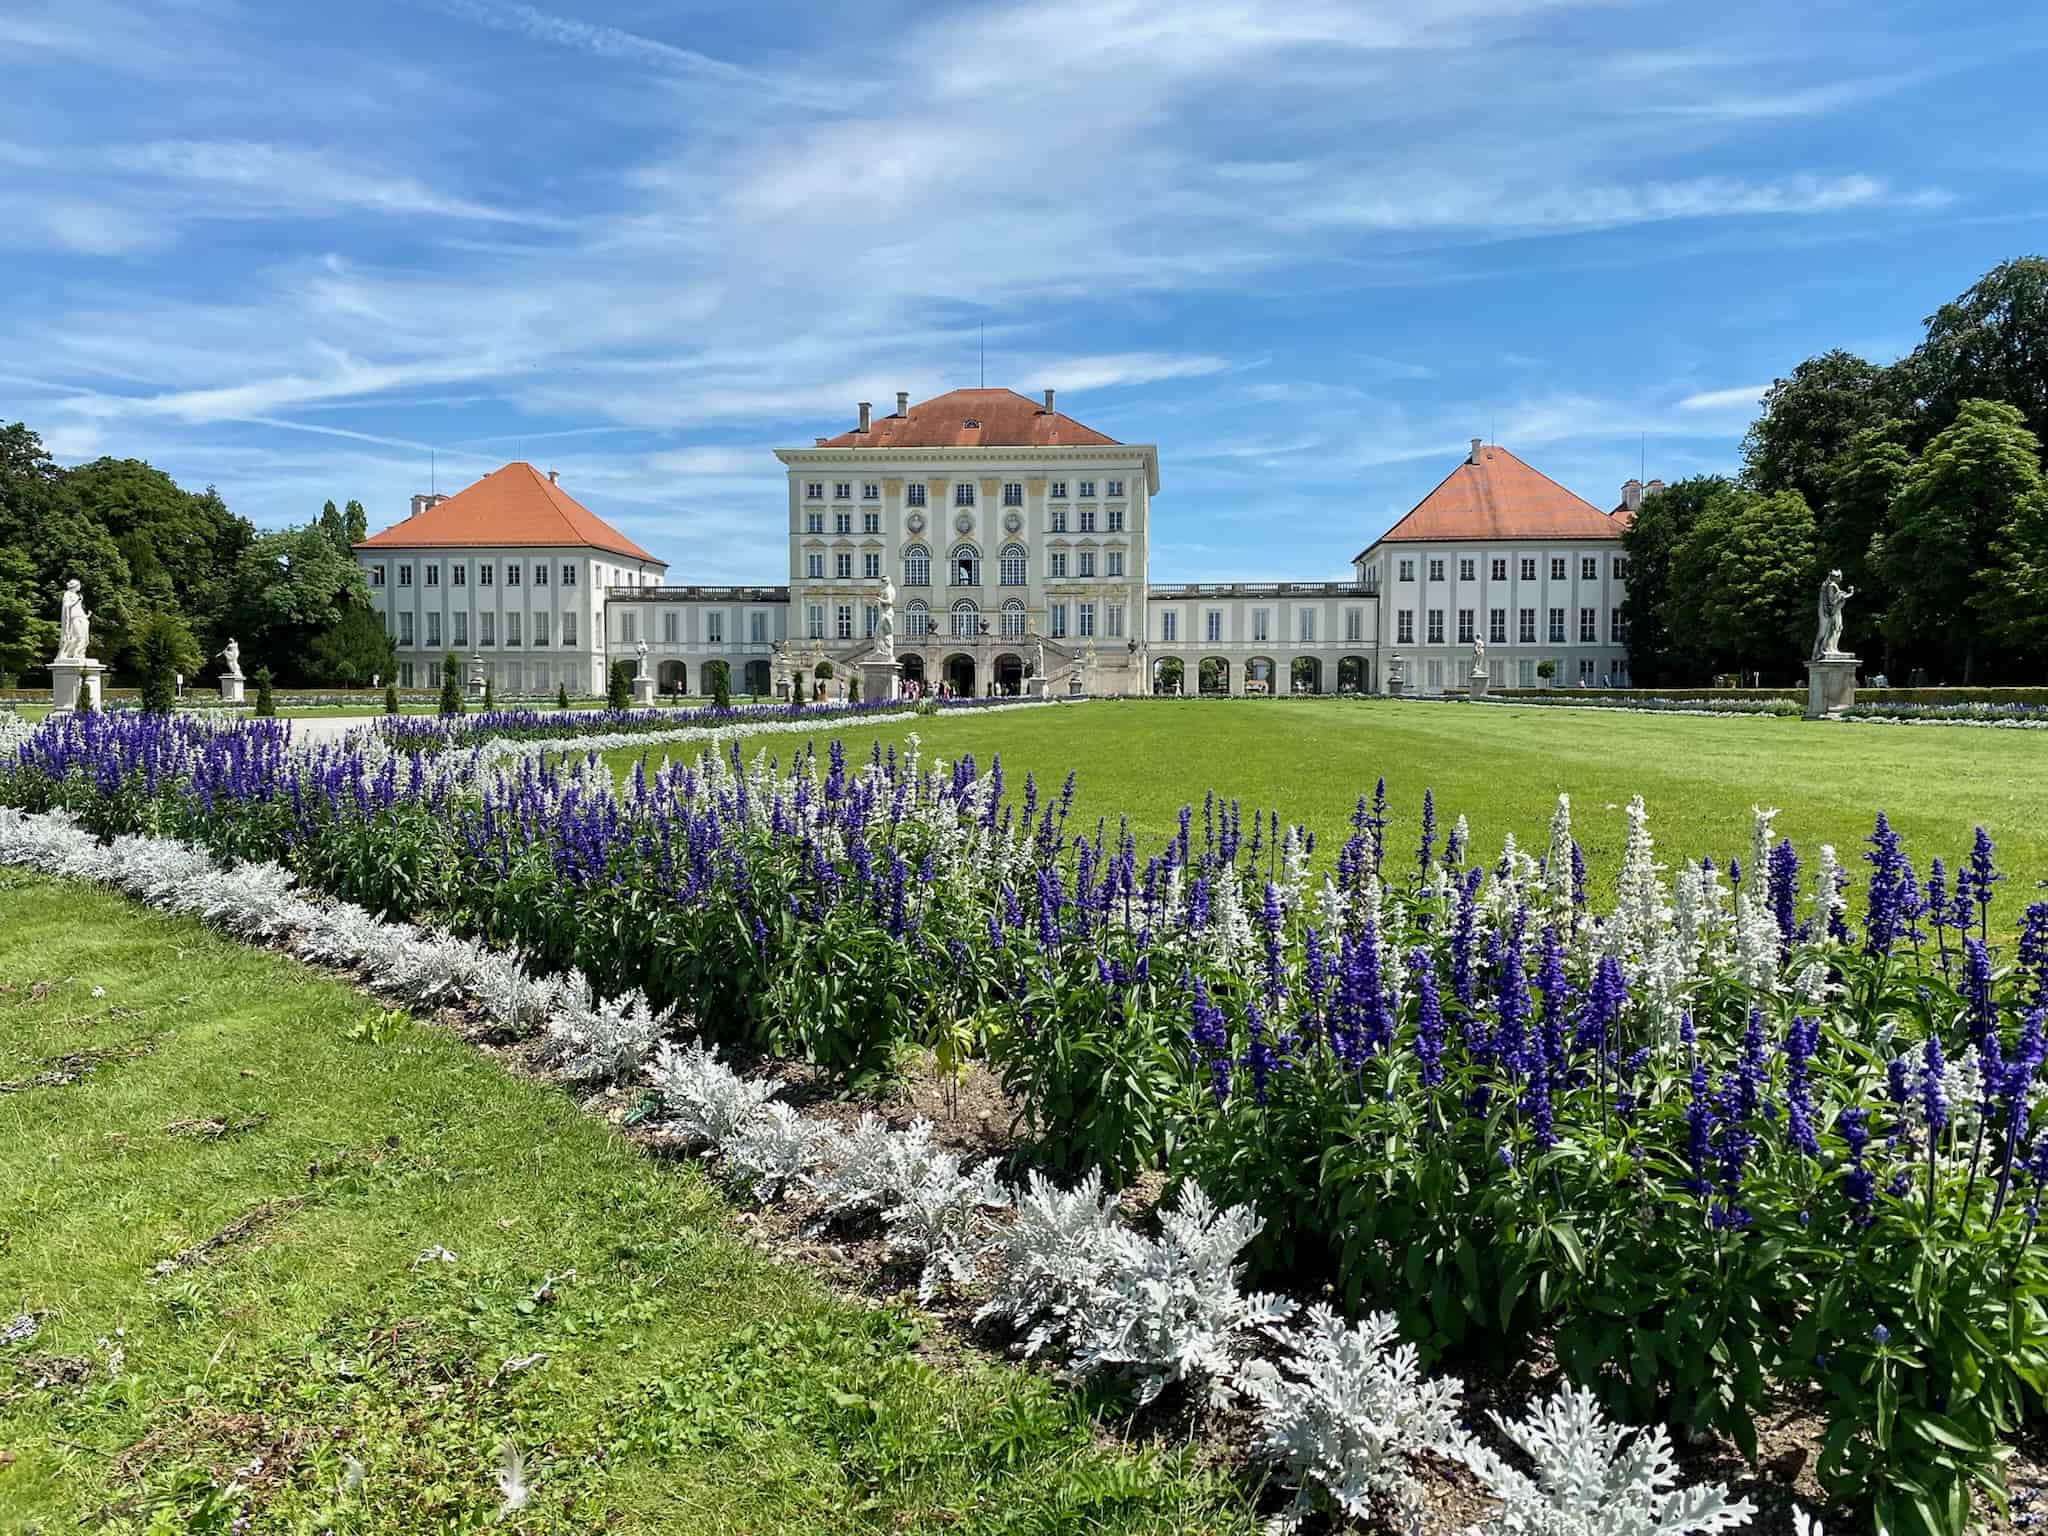 A palace in Munich, Germany